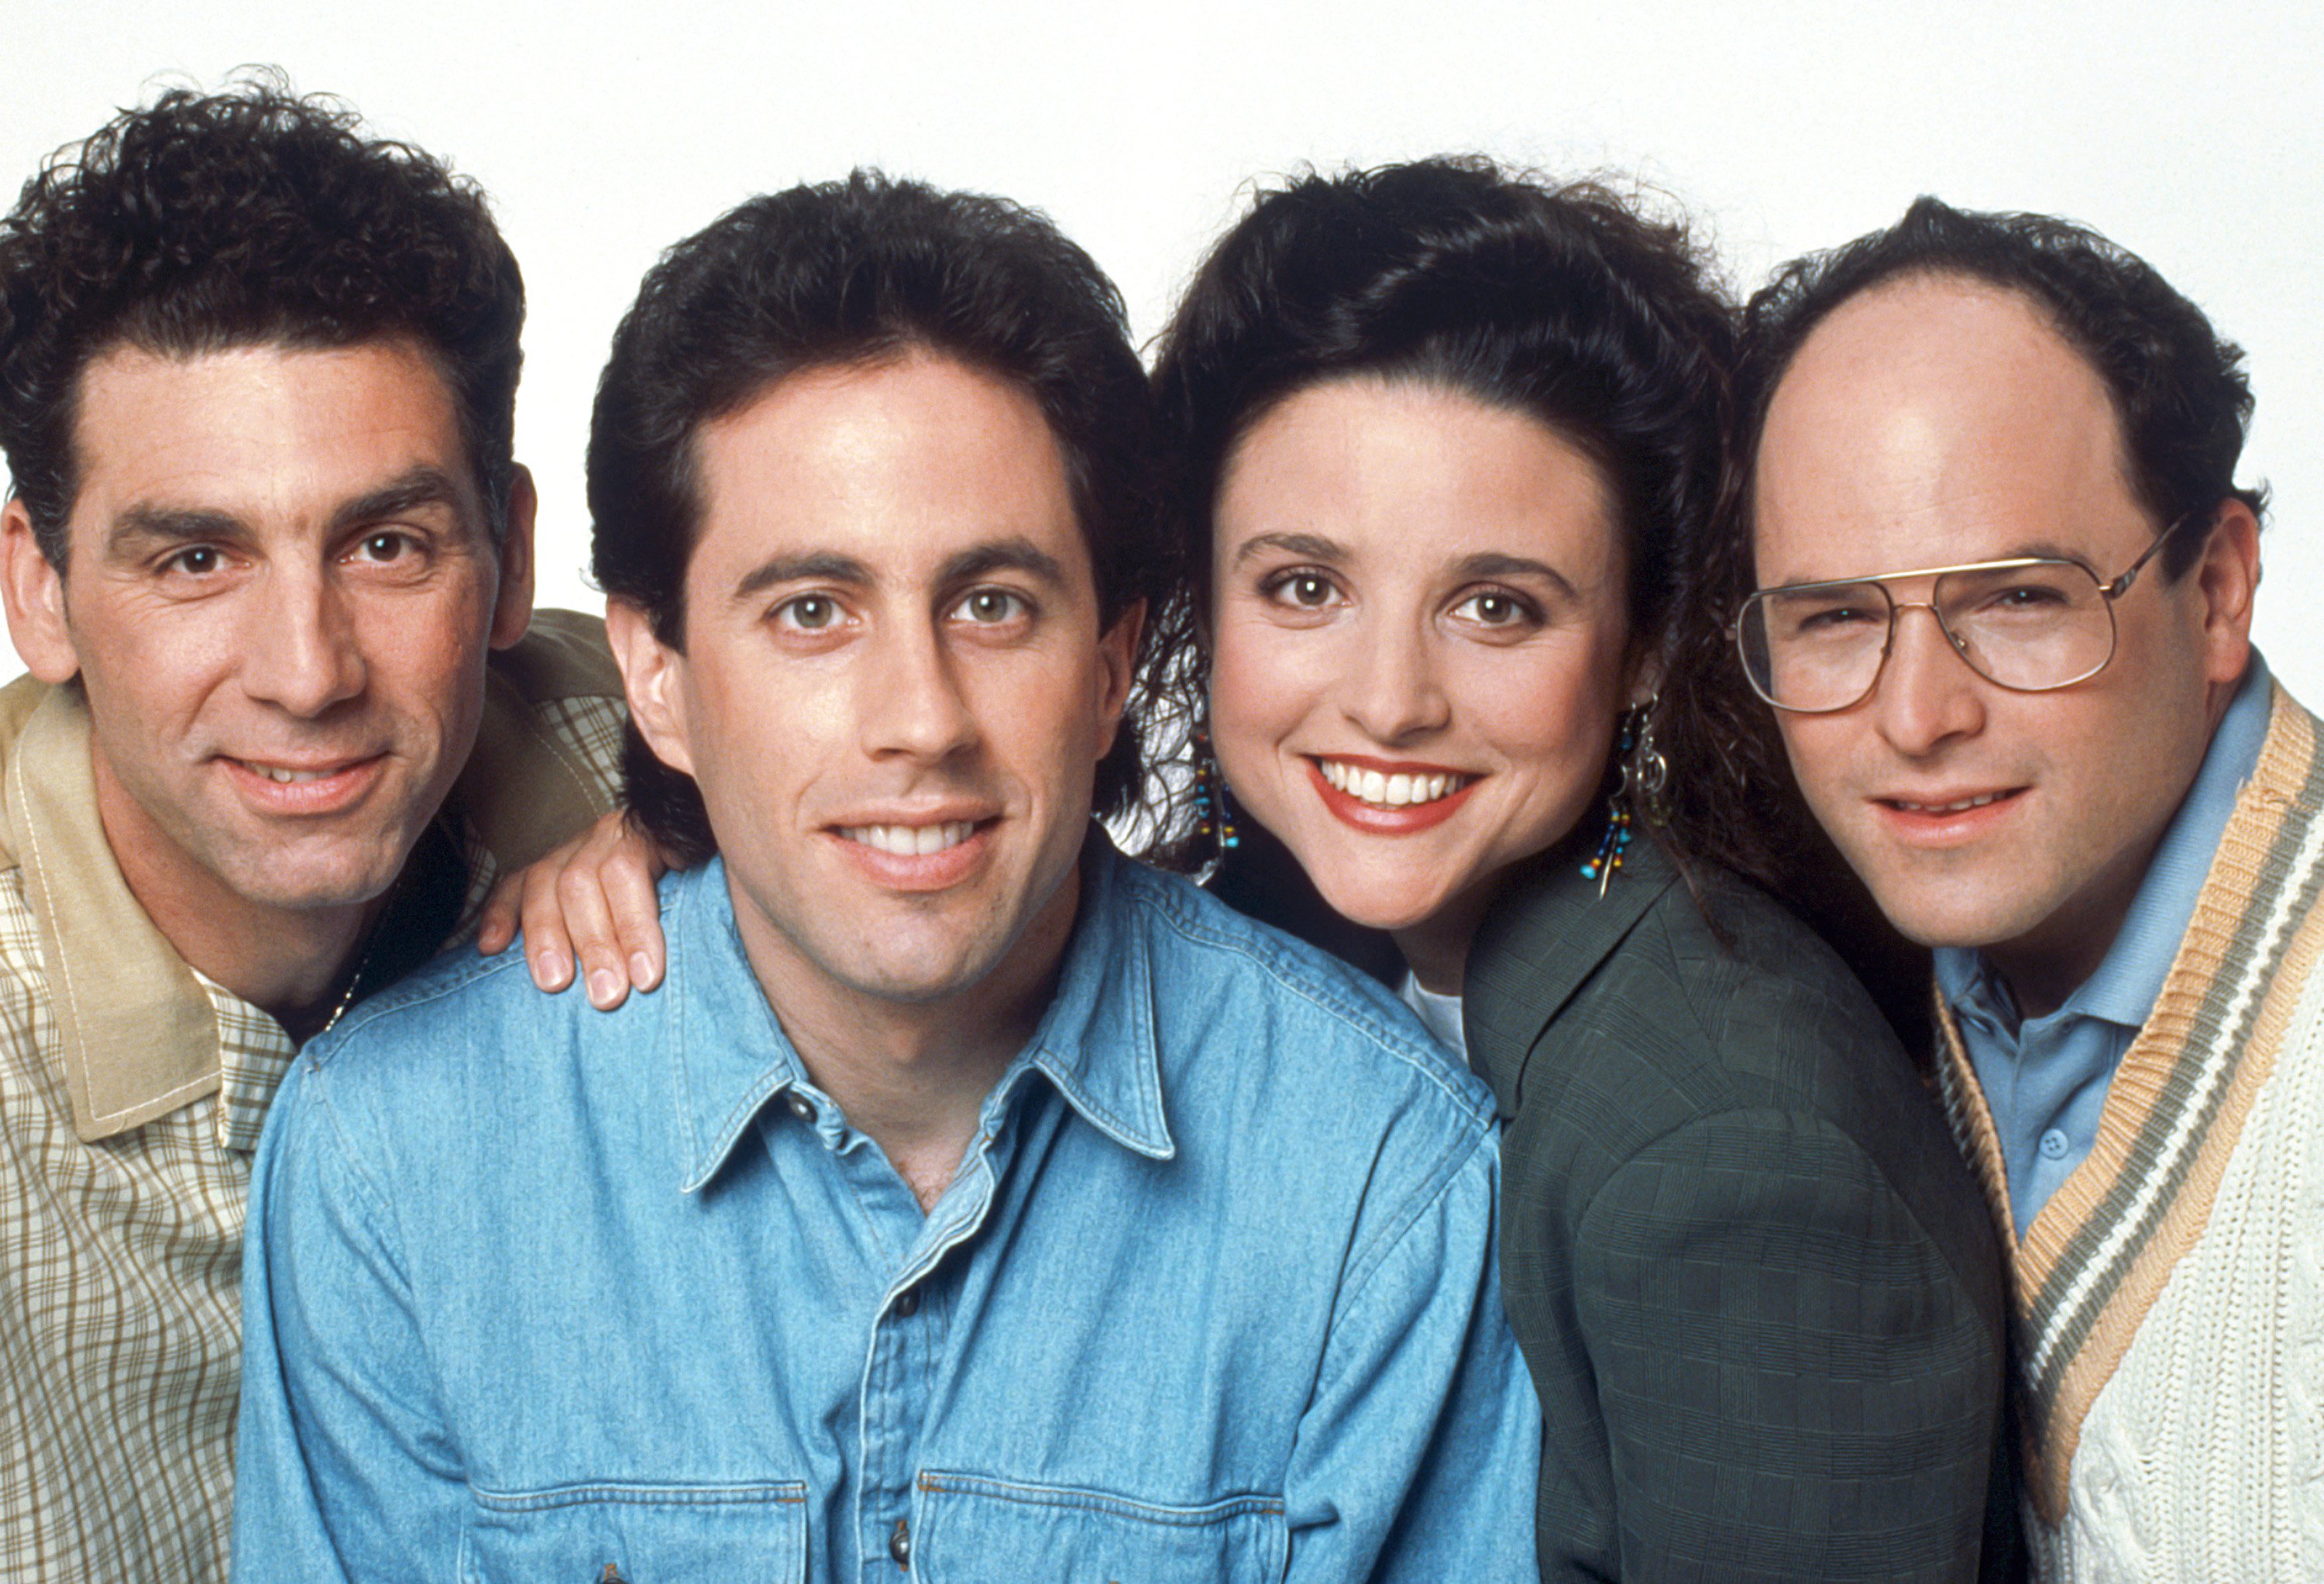 Michael Richards as Cosmo Kramer, Jerry Seinfeld as Jerry Seinfeld, Julia Louis-Dreyfus as Elaine Benes and Jason Alexander as George Costanza  